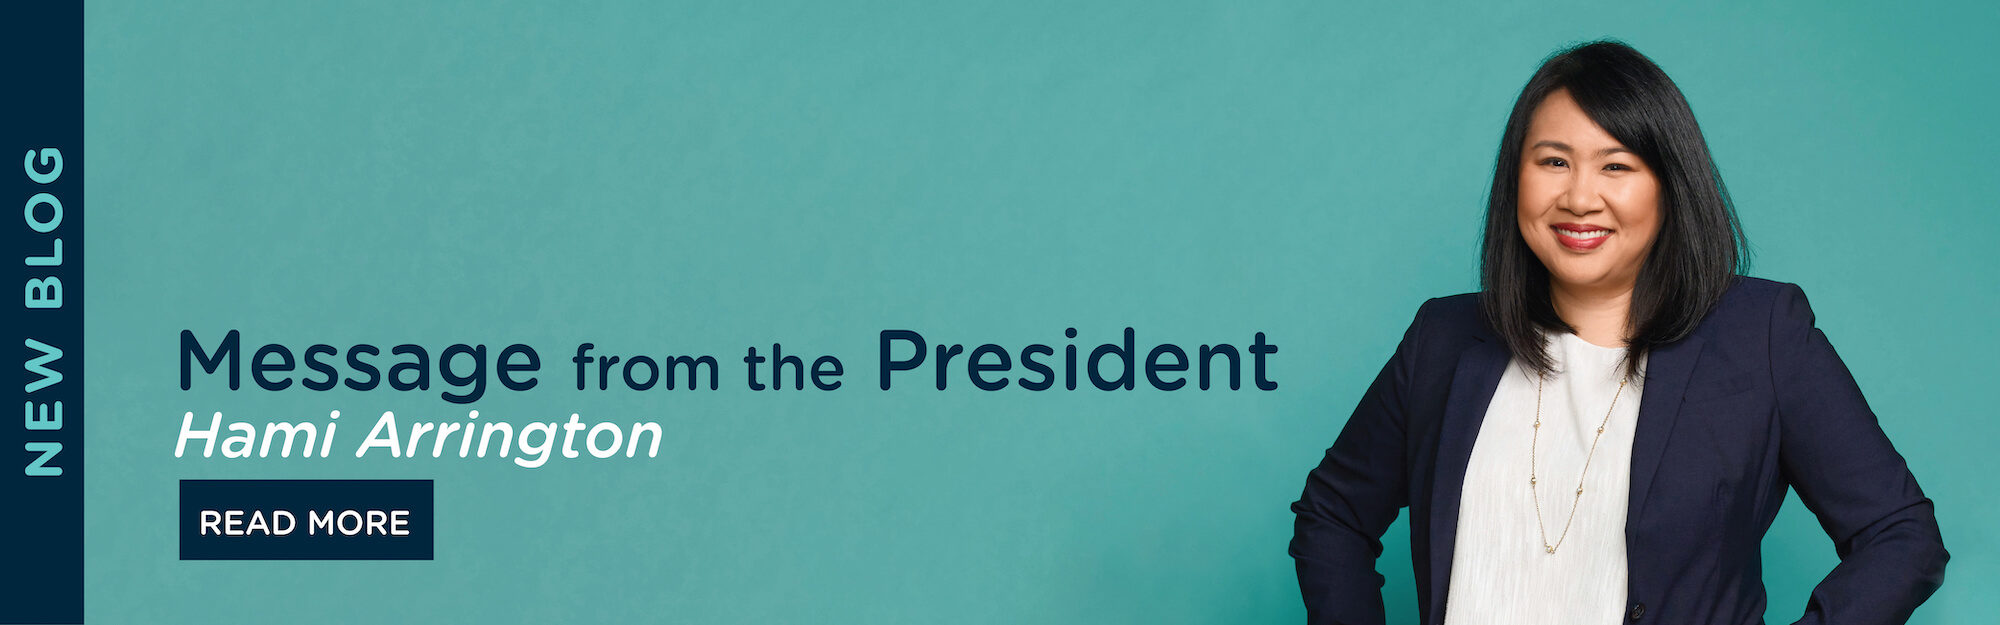 AMA President's Message Blog